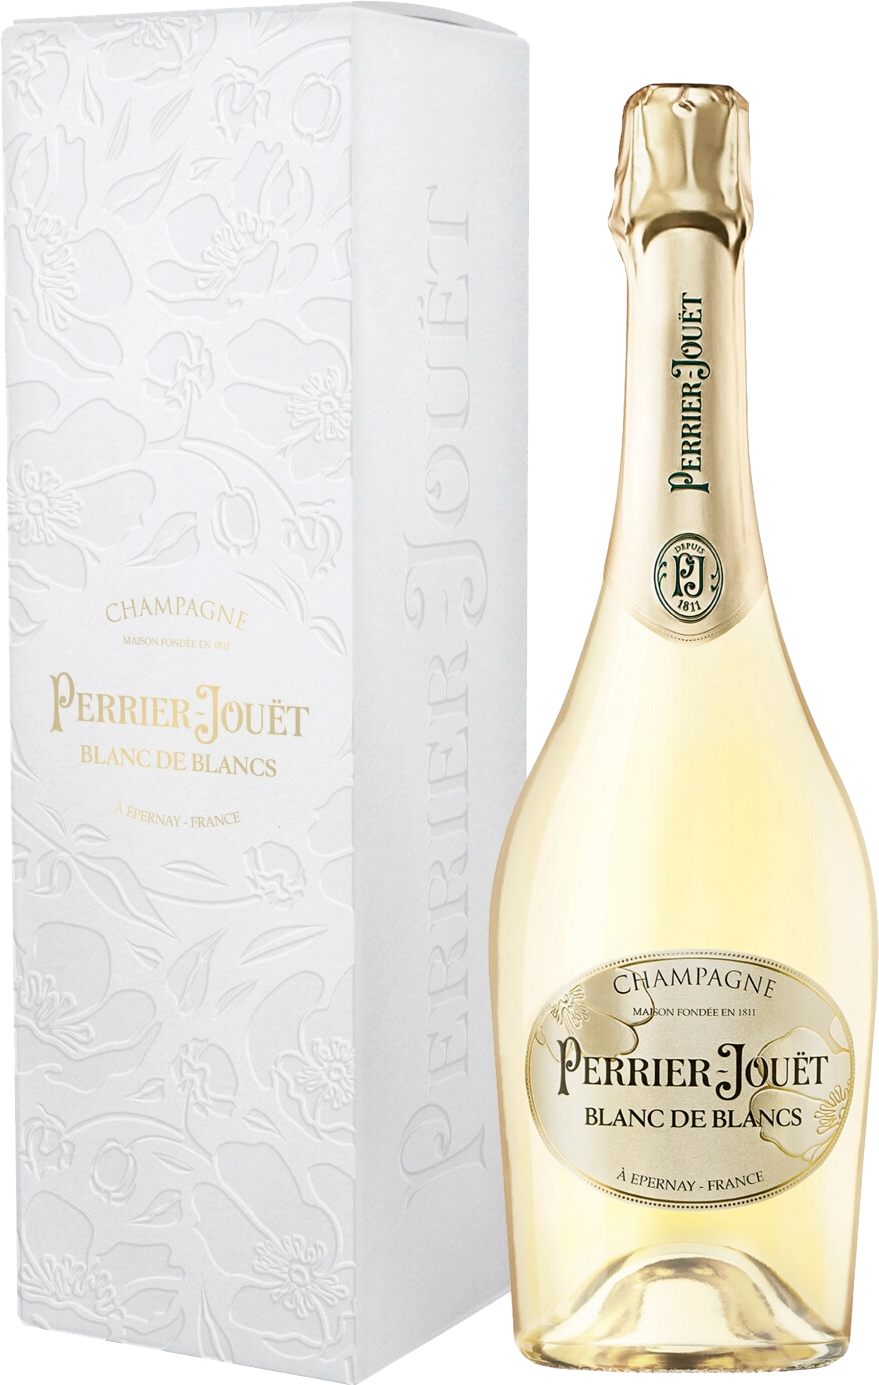 Perrier-Jouet Blanc De Blancs Champagne AOC Brut (gift box) ruinart blanc de blanc champagne aoc gift box